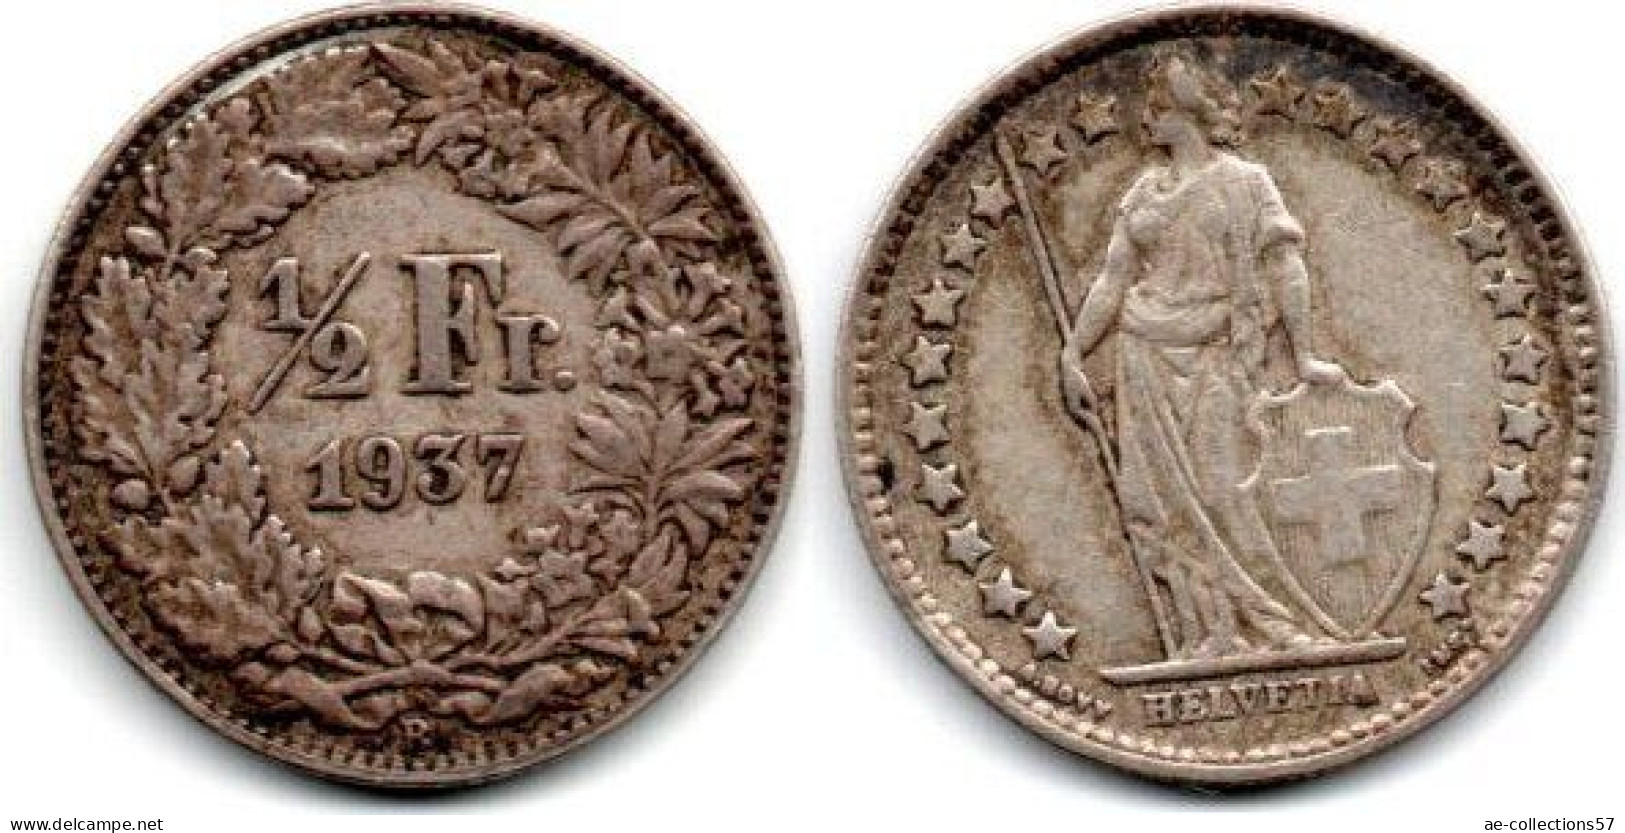 MA 28844 / Suisse - Schweiz - Switzerland 1/2 Franc 1937 B TTB - 1/2 Franken